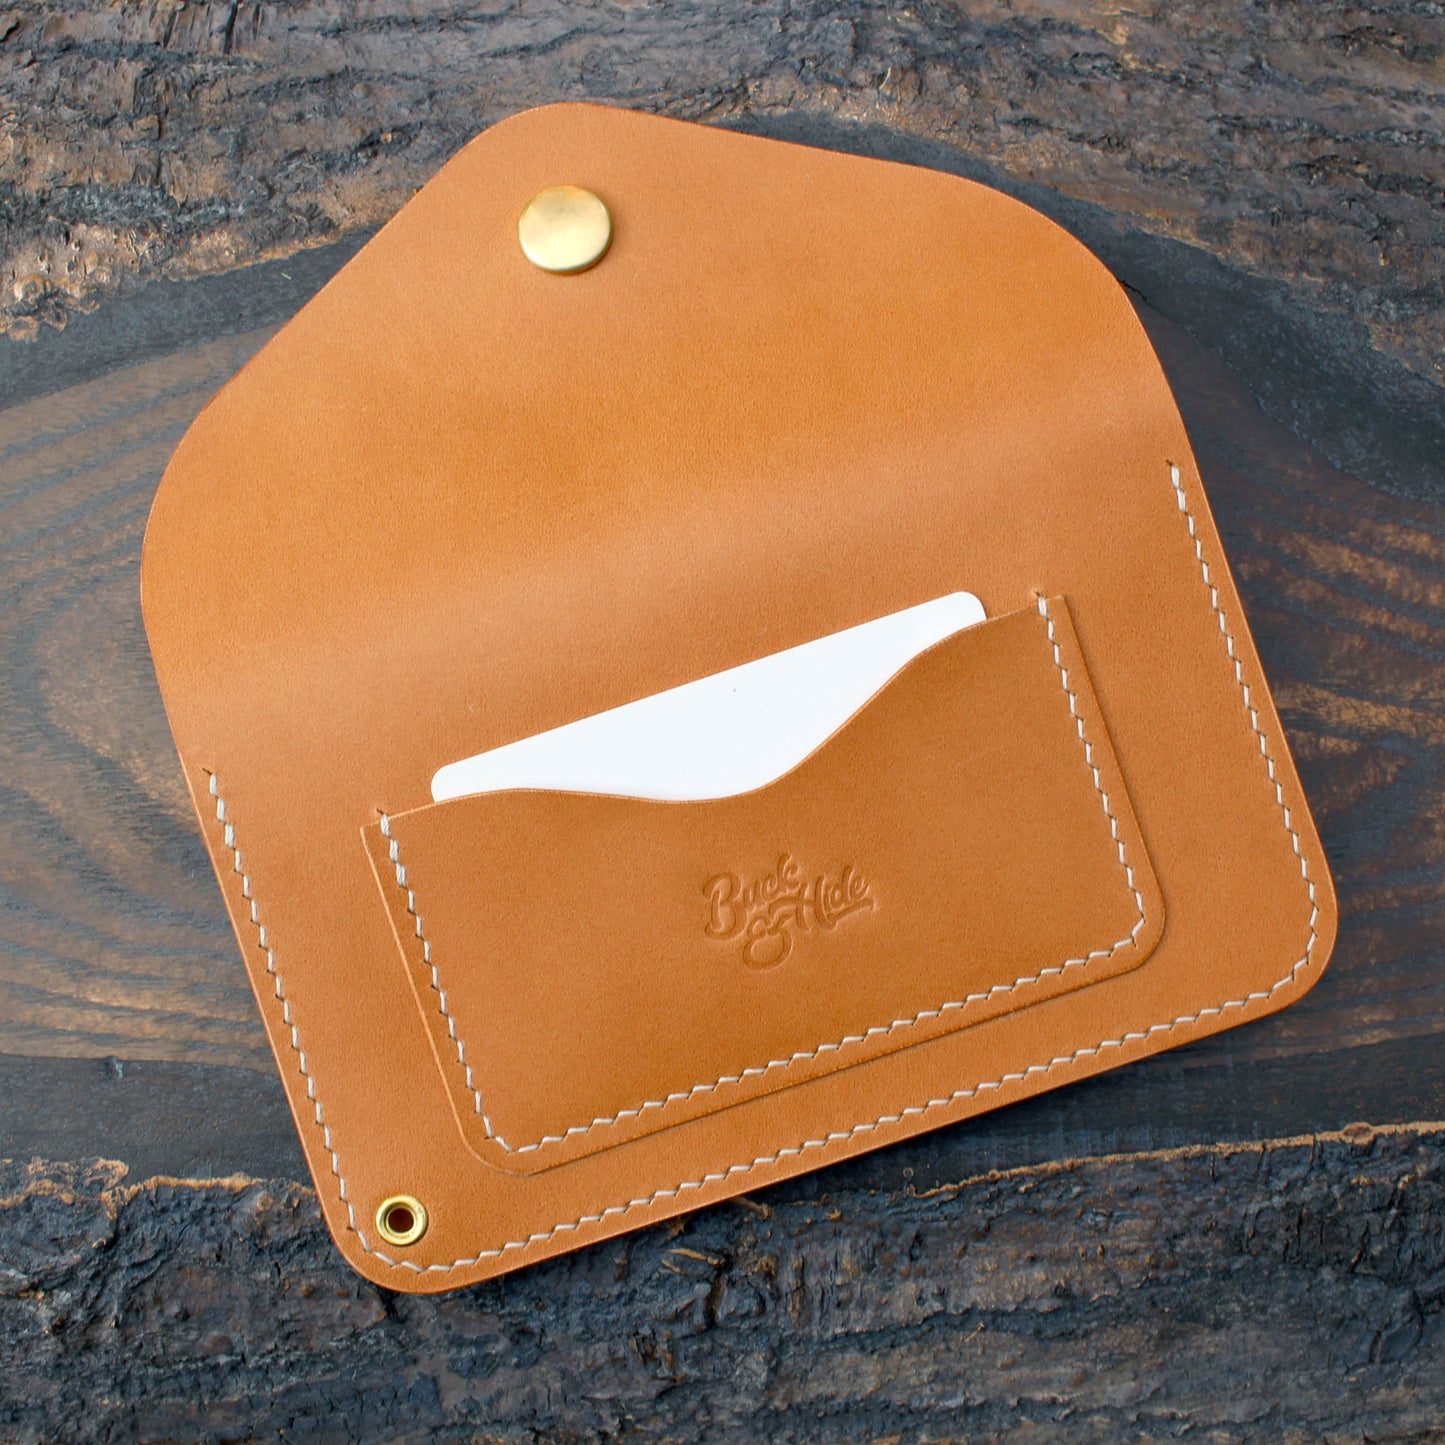 Trucker-style snap wallet in biscuit Buttero.